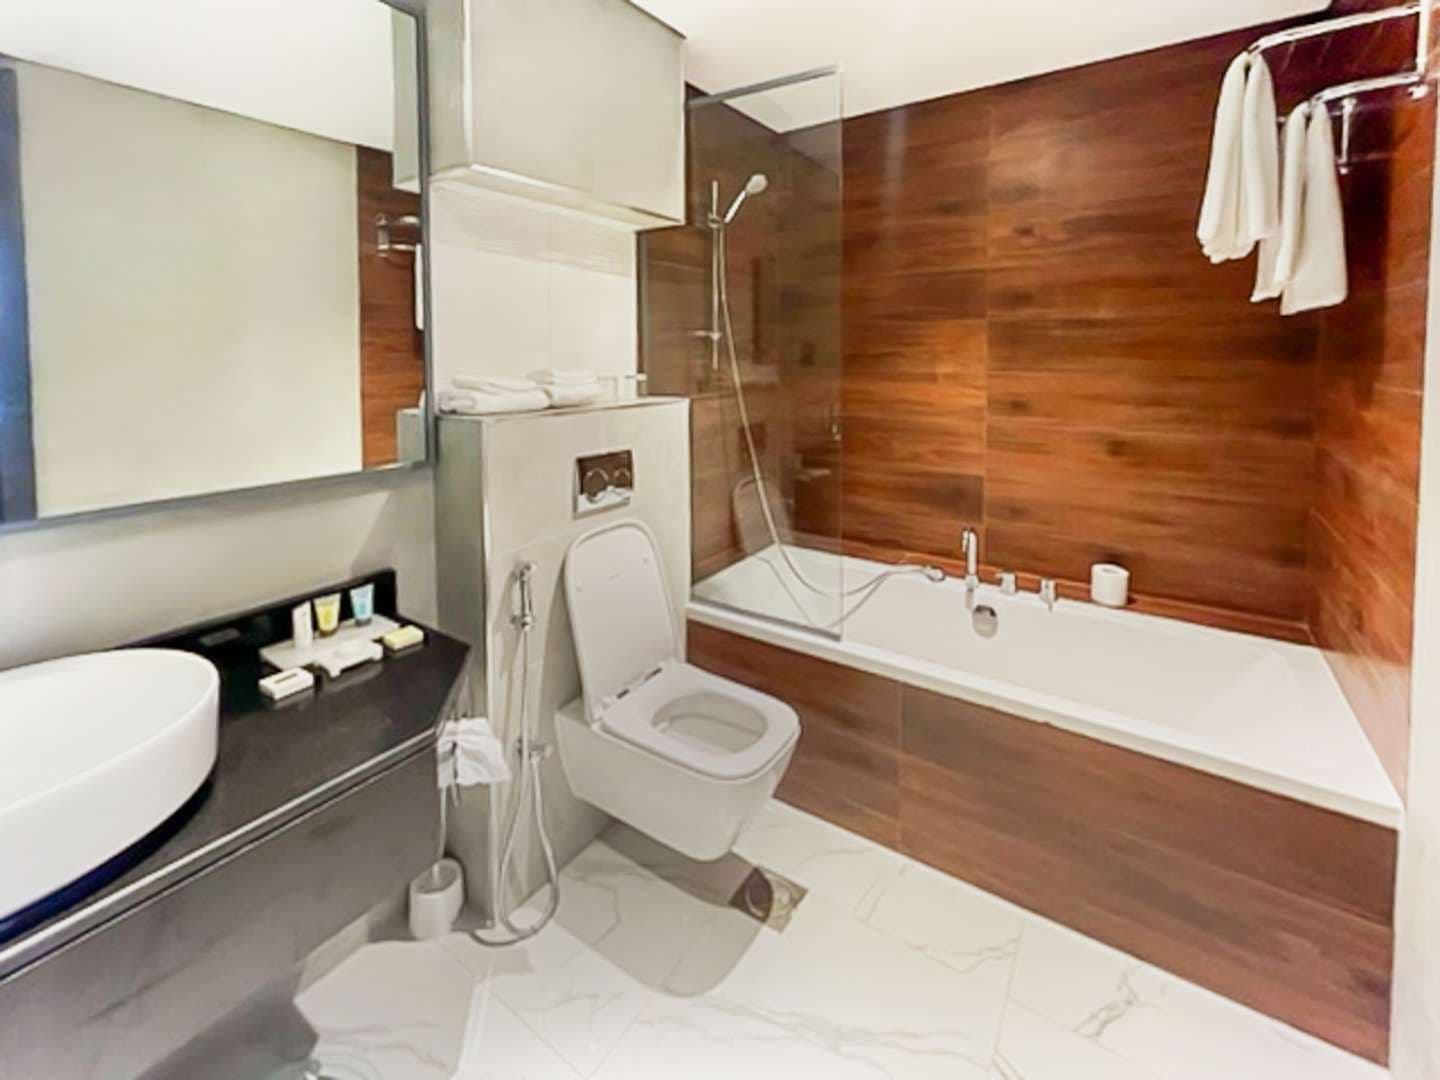 2 Bedroom Villa For Rent Dubai Marina Moon Lp11825 173c33203f0f4b00.jpg